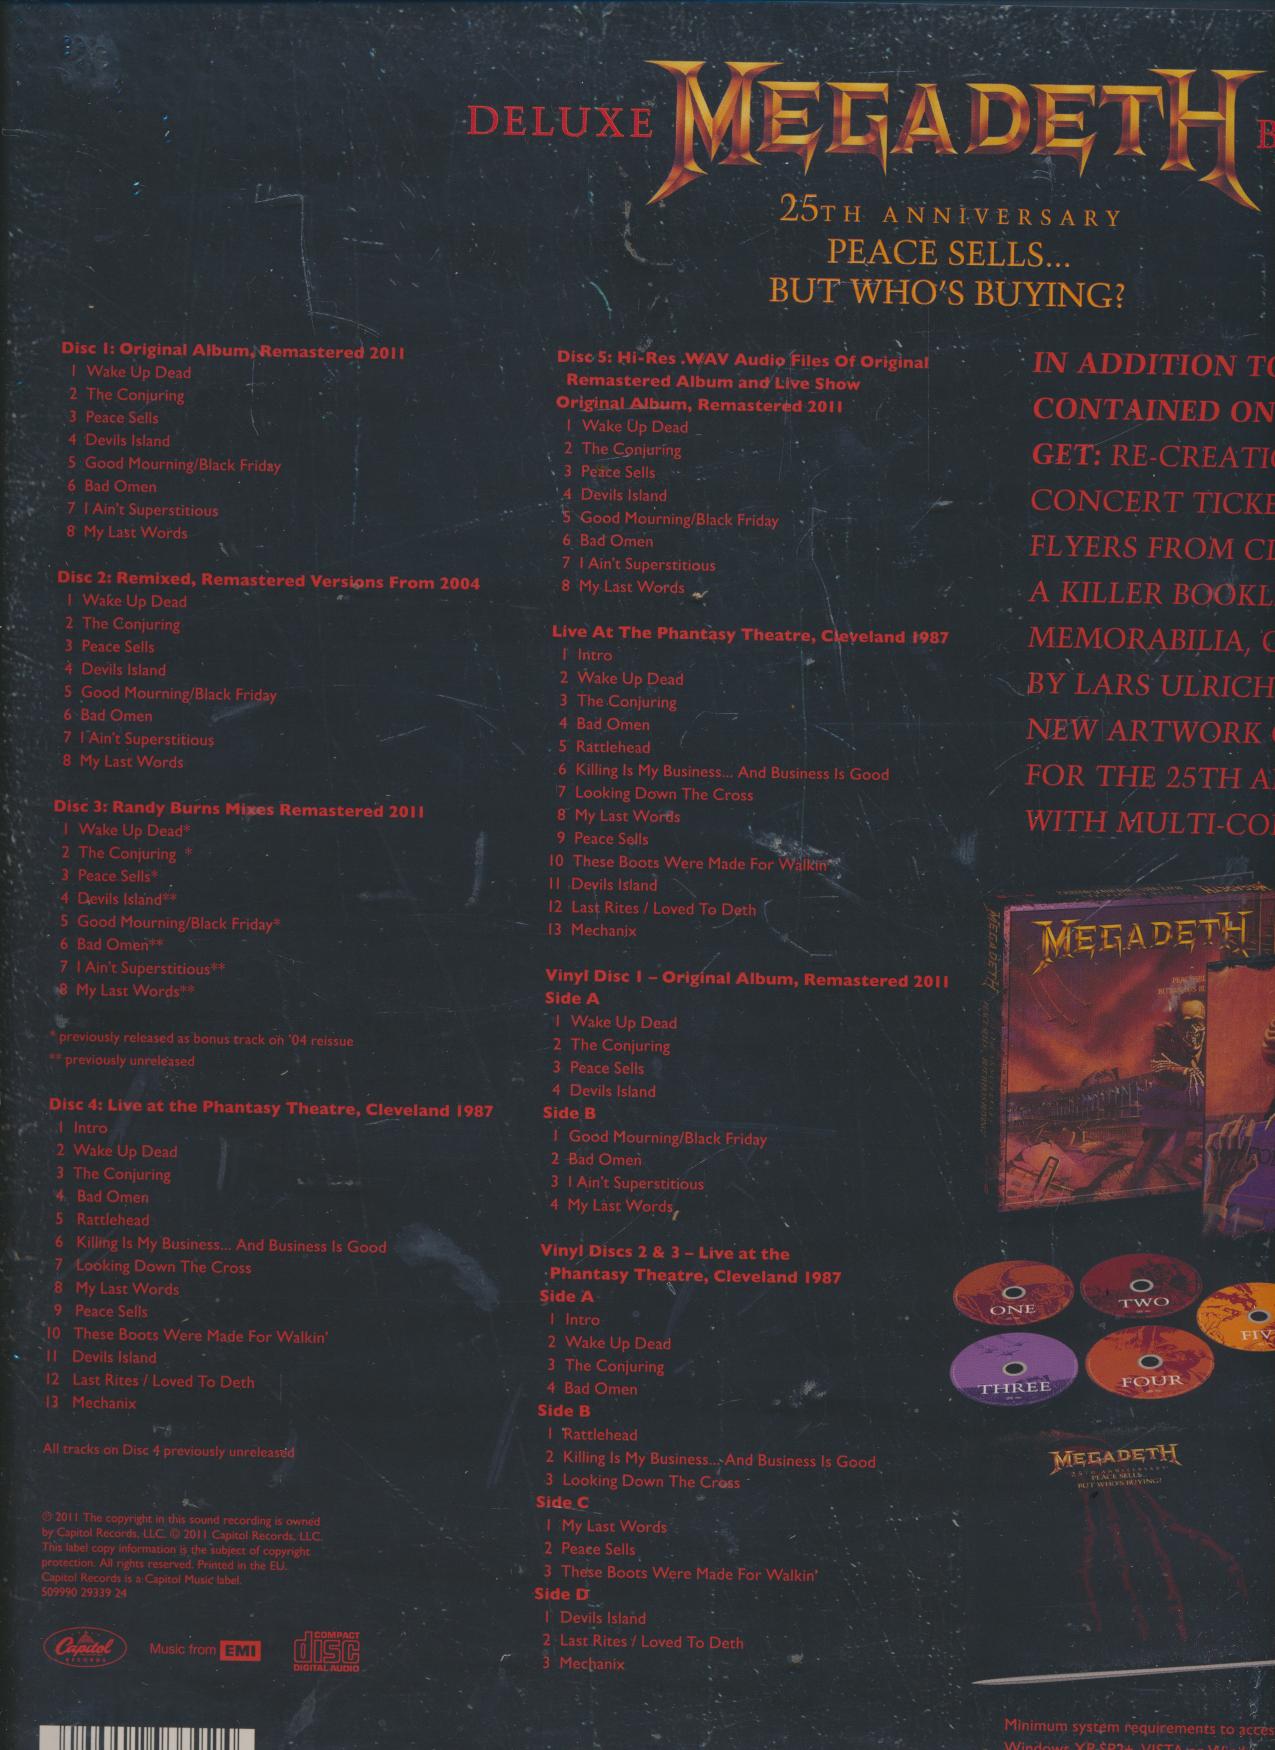 But　(5cd+3lp)　cd　obchod　Cd　Buying　☆　tvůj　dvd　SUPRSHOP　☆　Sells　Peace　Megadeth　Who's